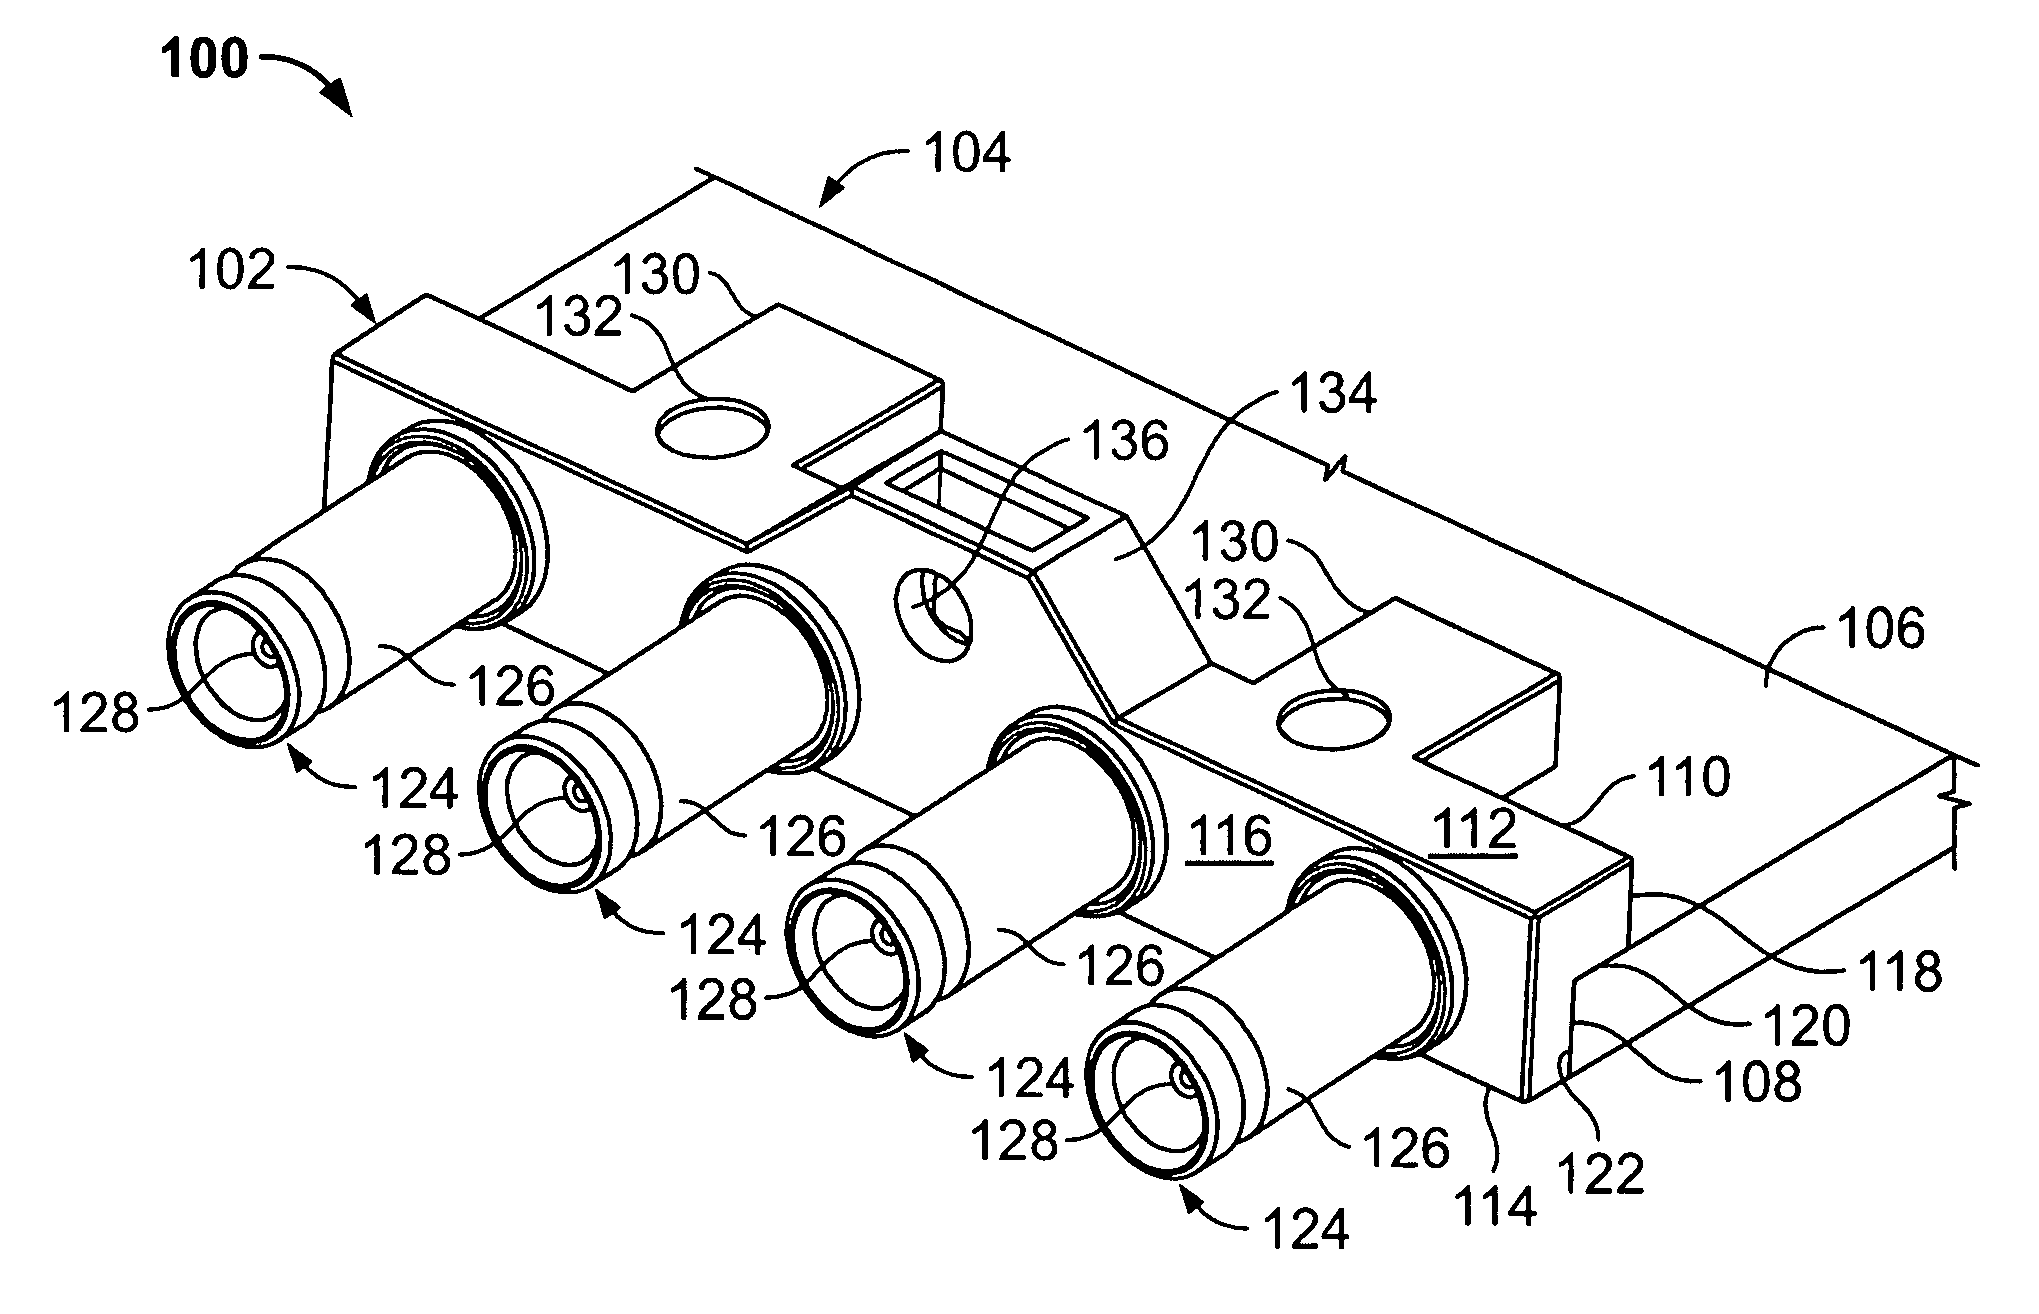 Multi-port RF connector